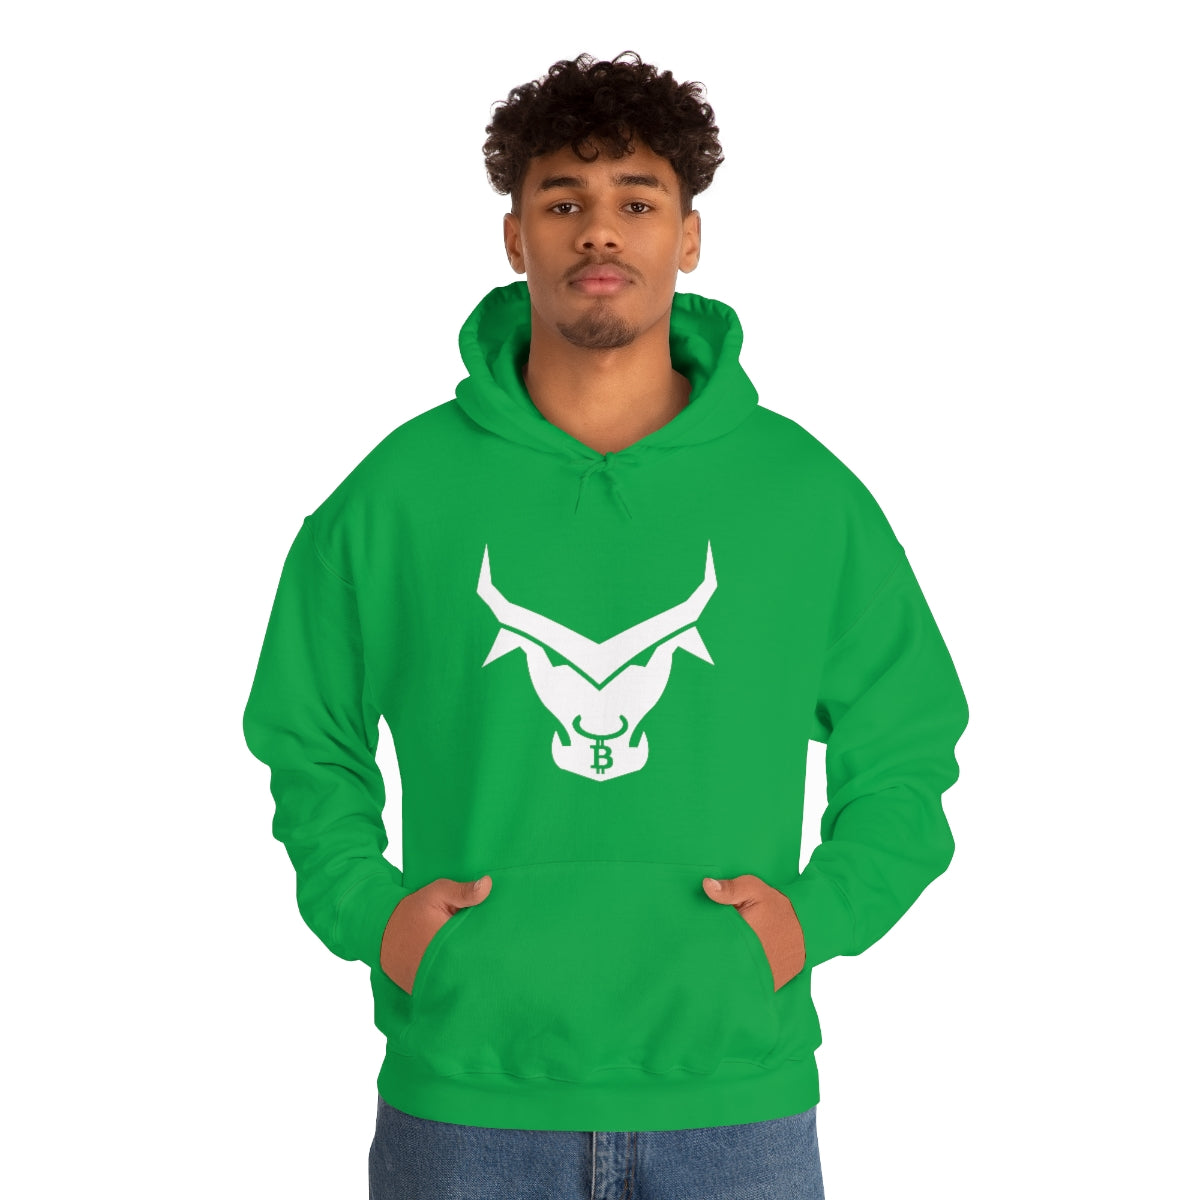 The BTC Bull Heavy Blend™ Hooded Sweatshirt